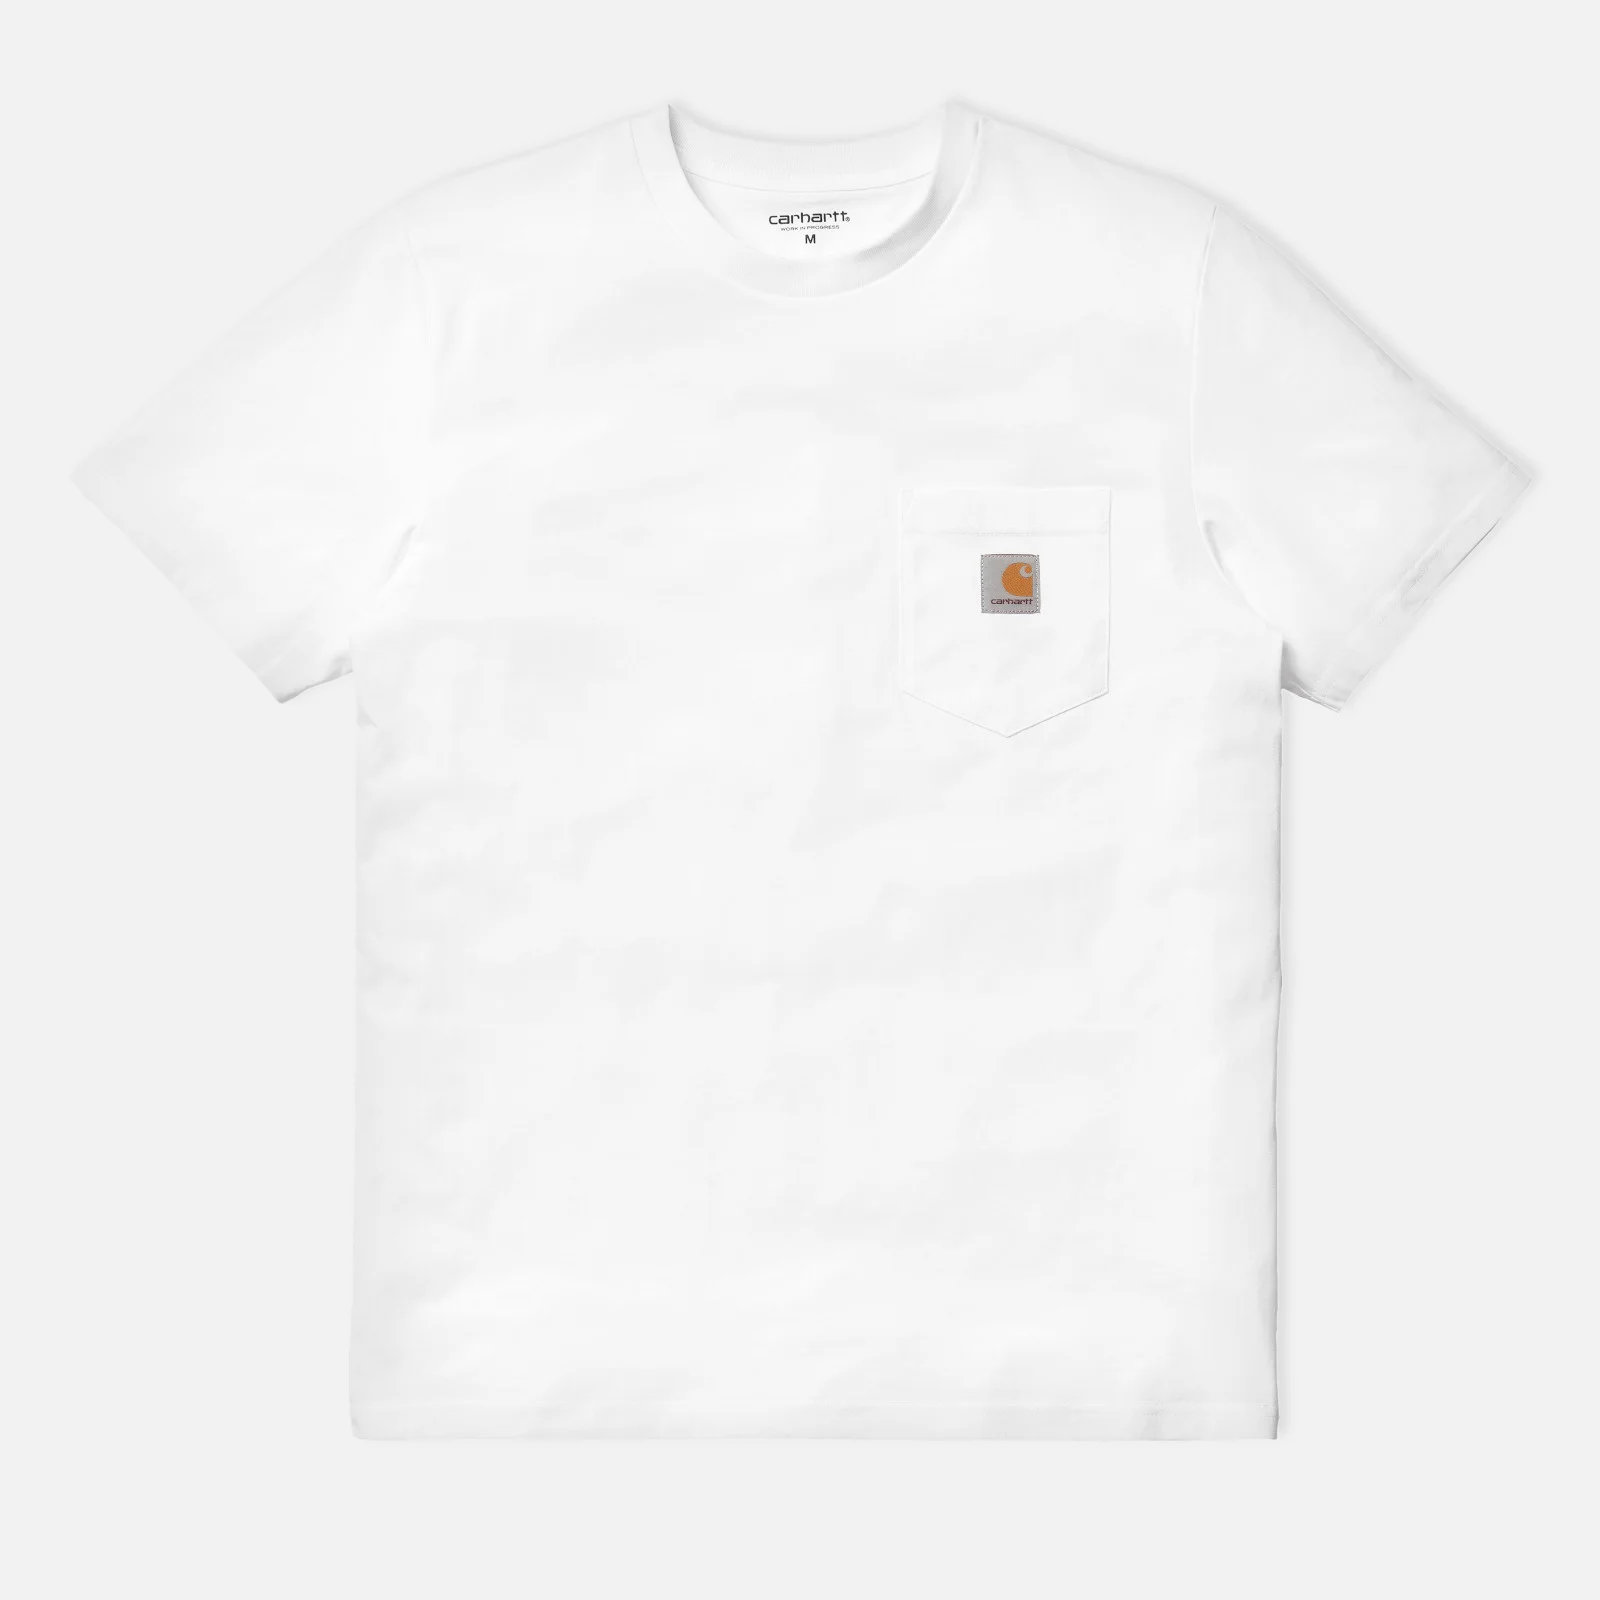 Carhartt WIP Men's Pocket T-Shirt - White Image 1